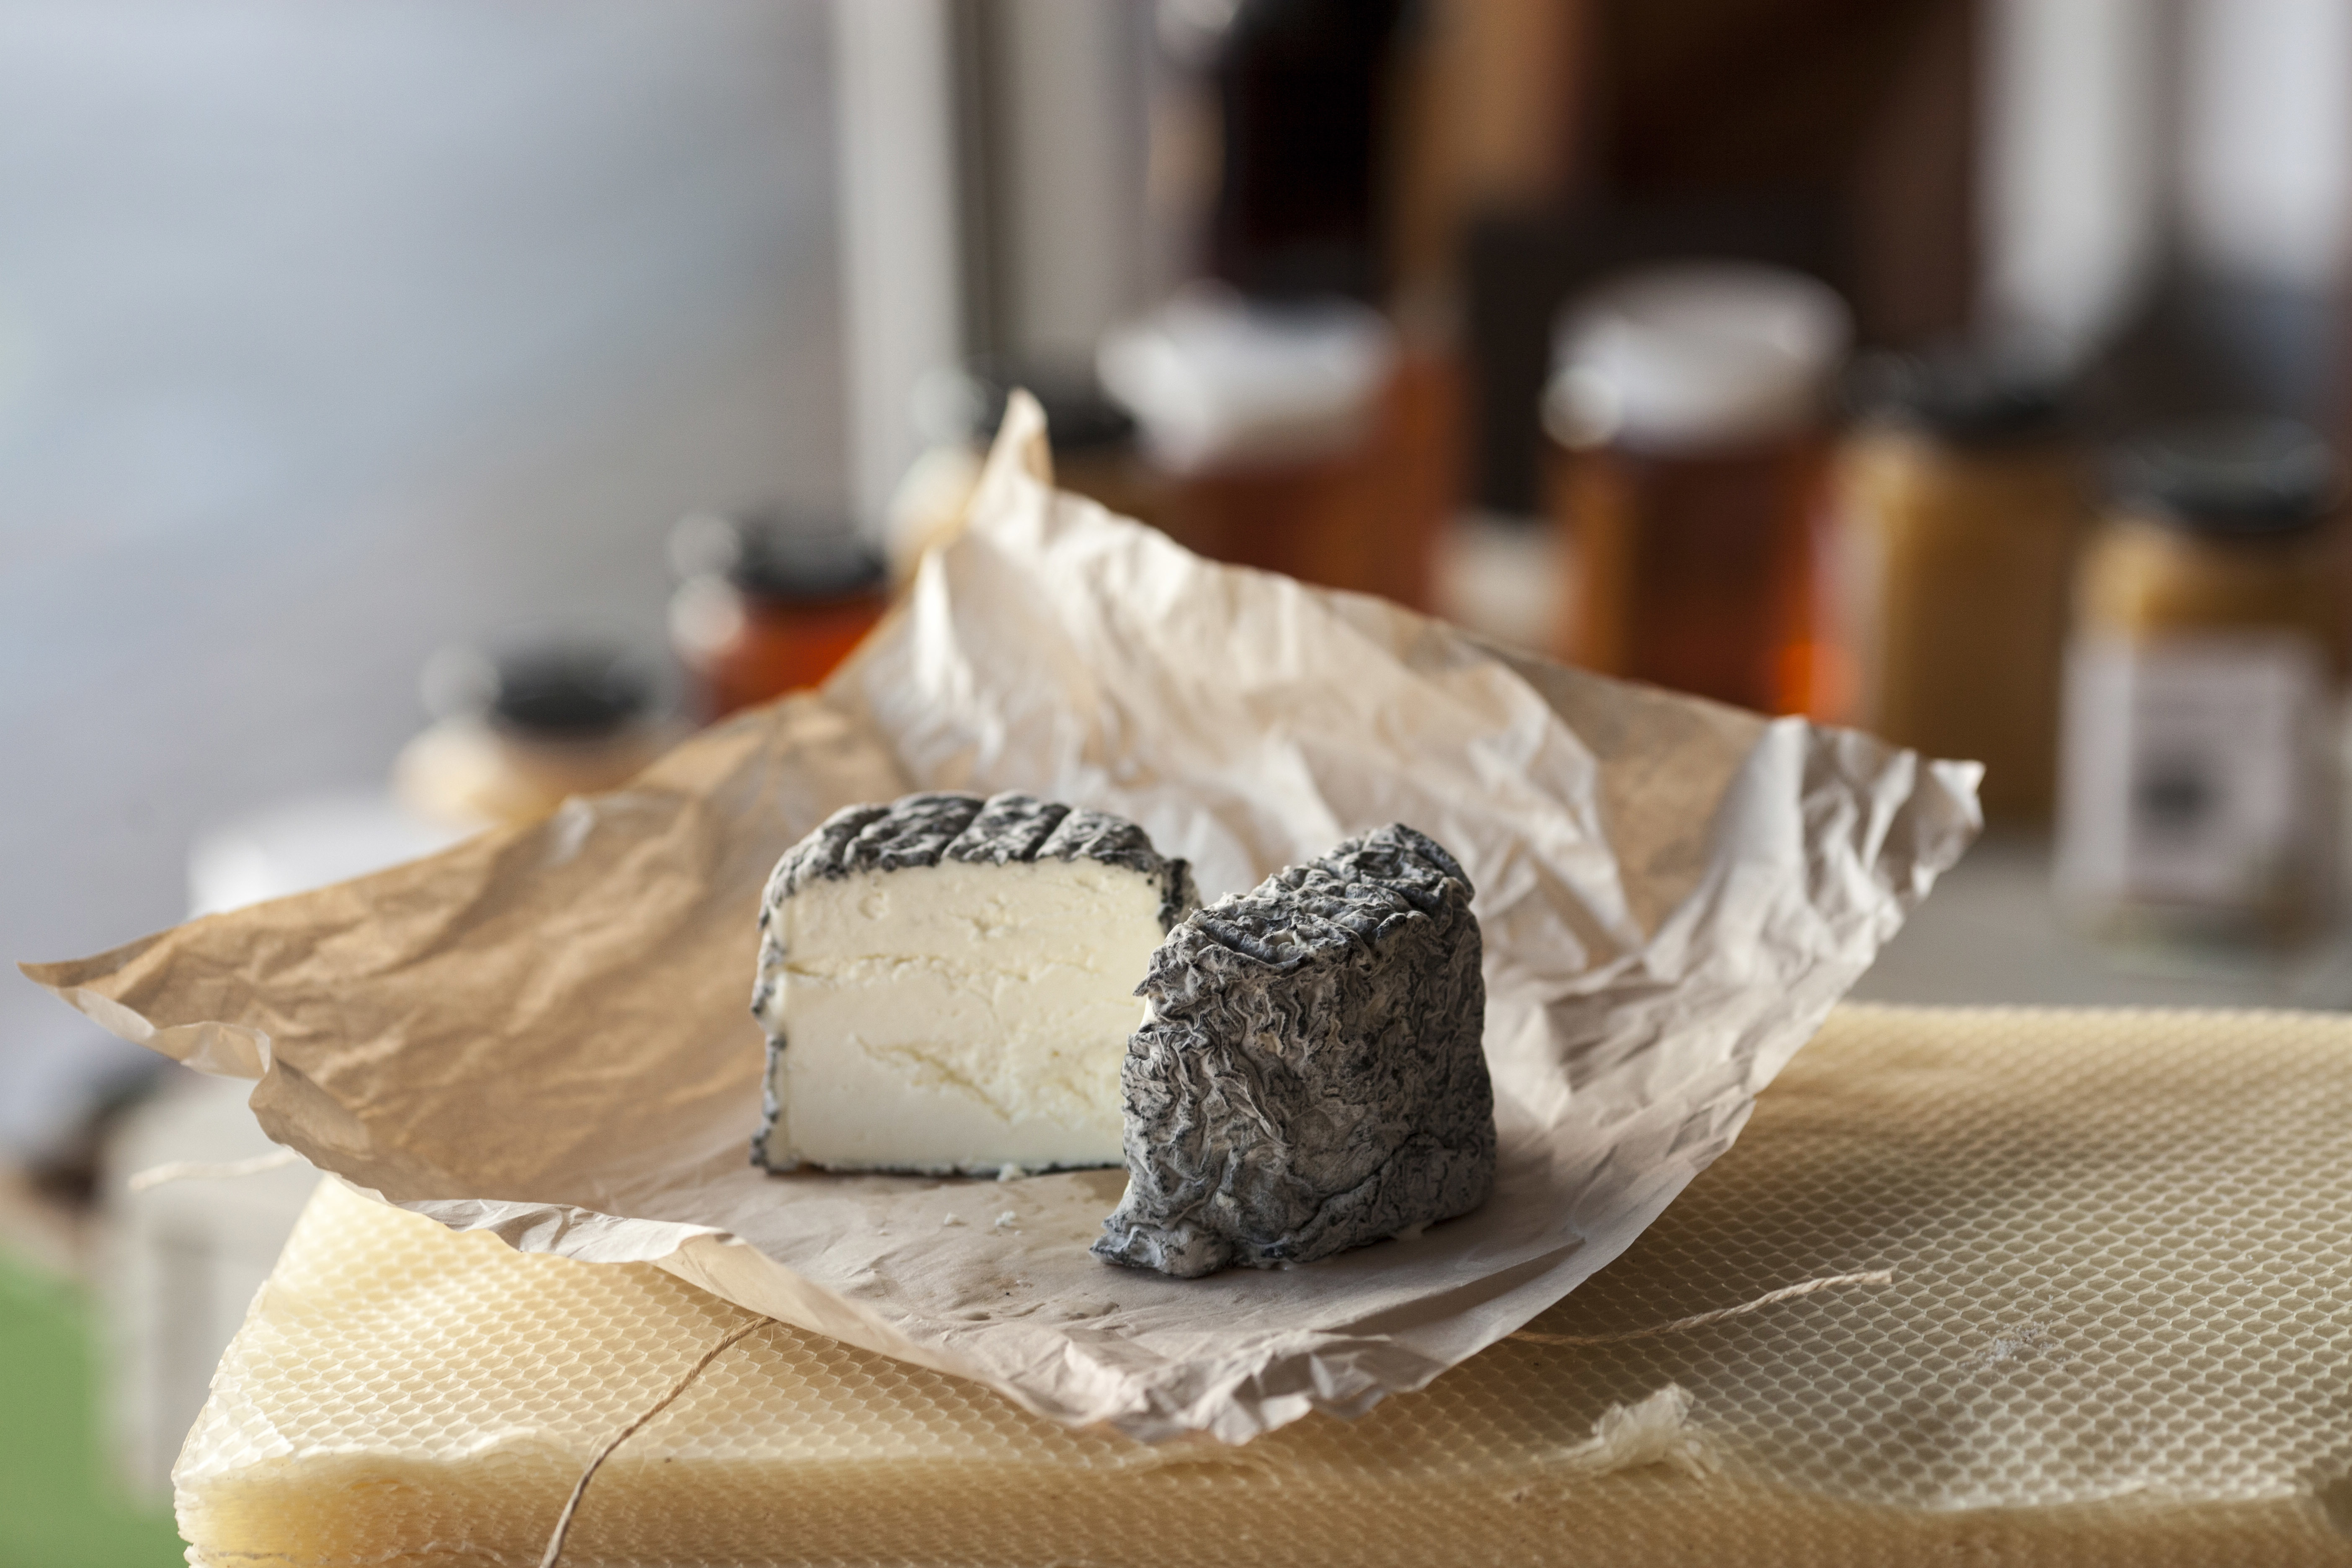 Meet New Zealand's Little Cheesemakers